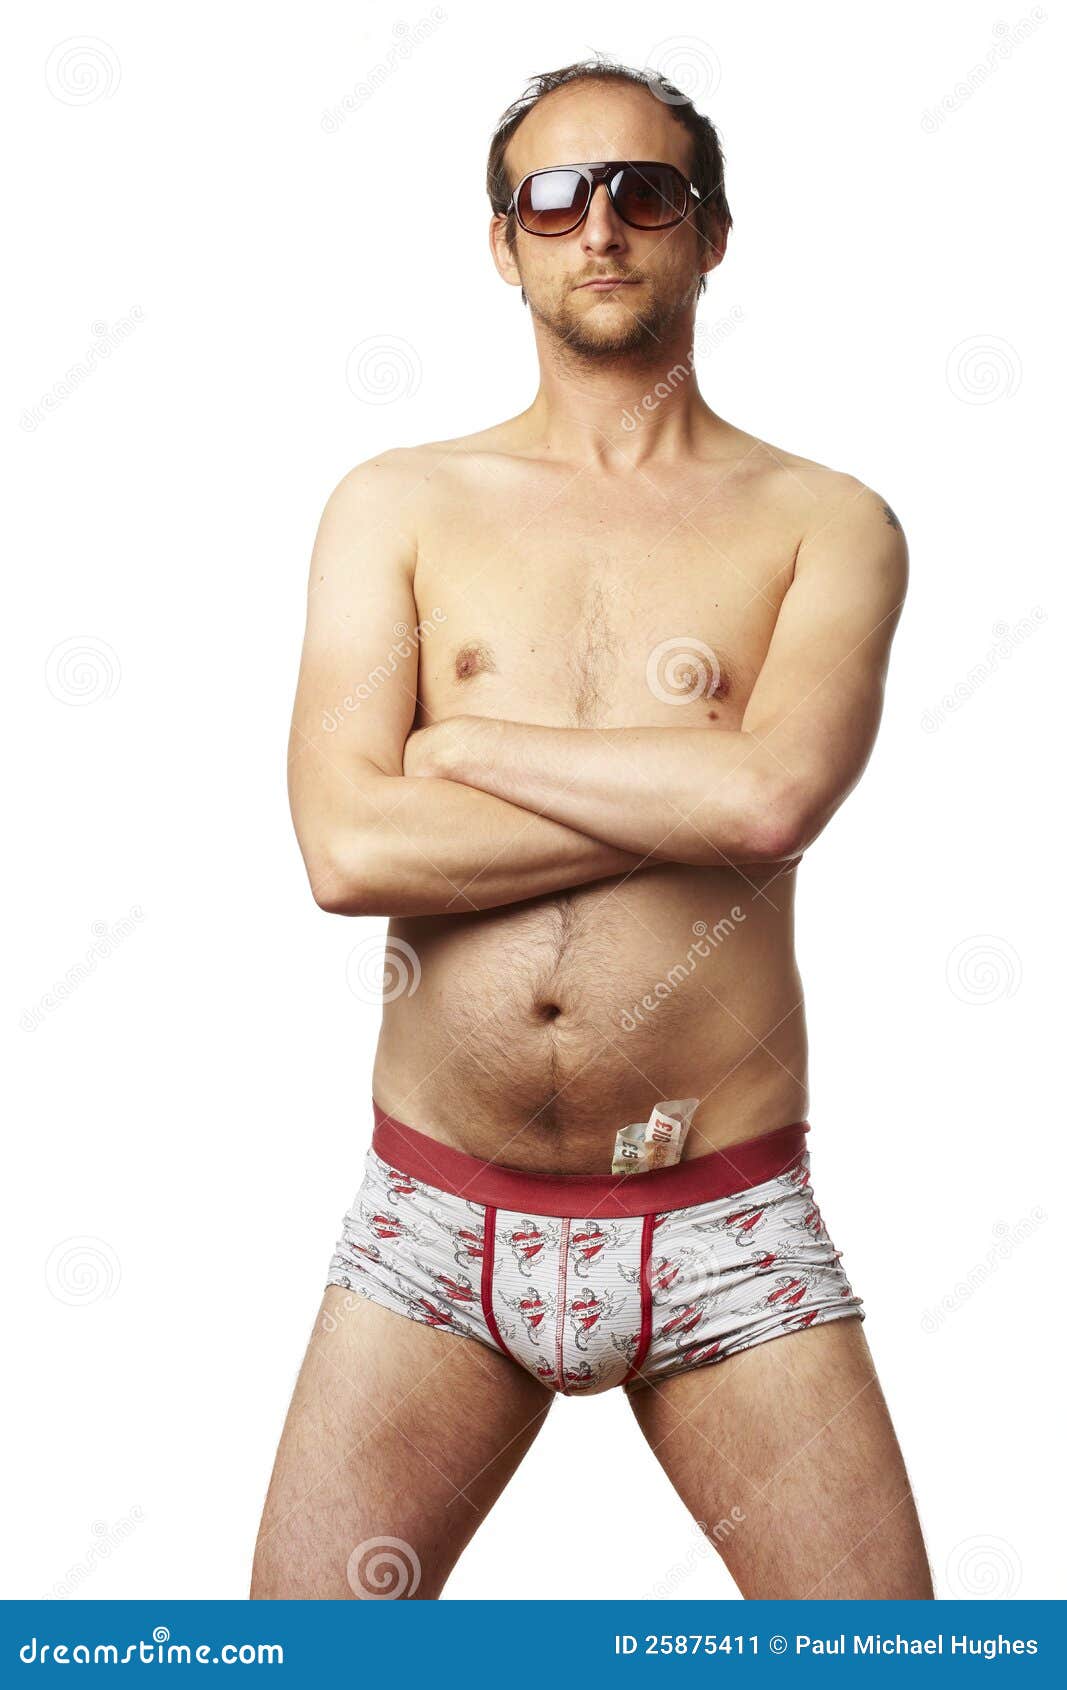 Male stripper in underwear stock image image photo